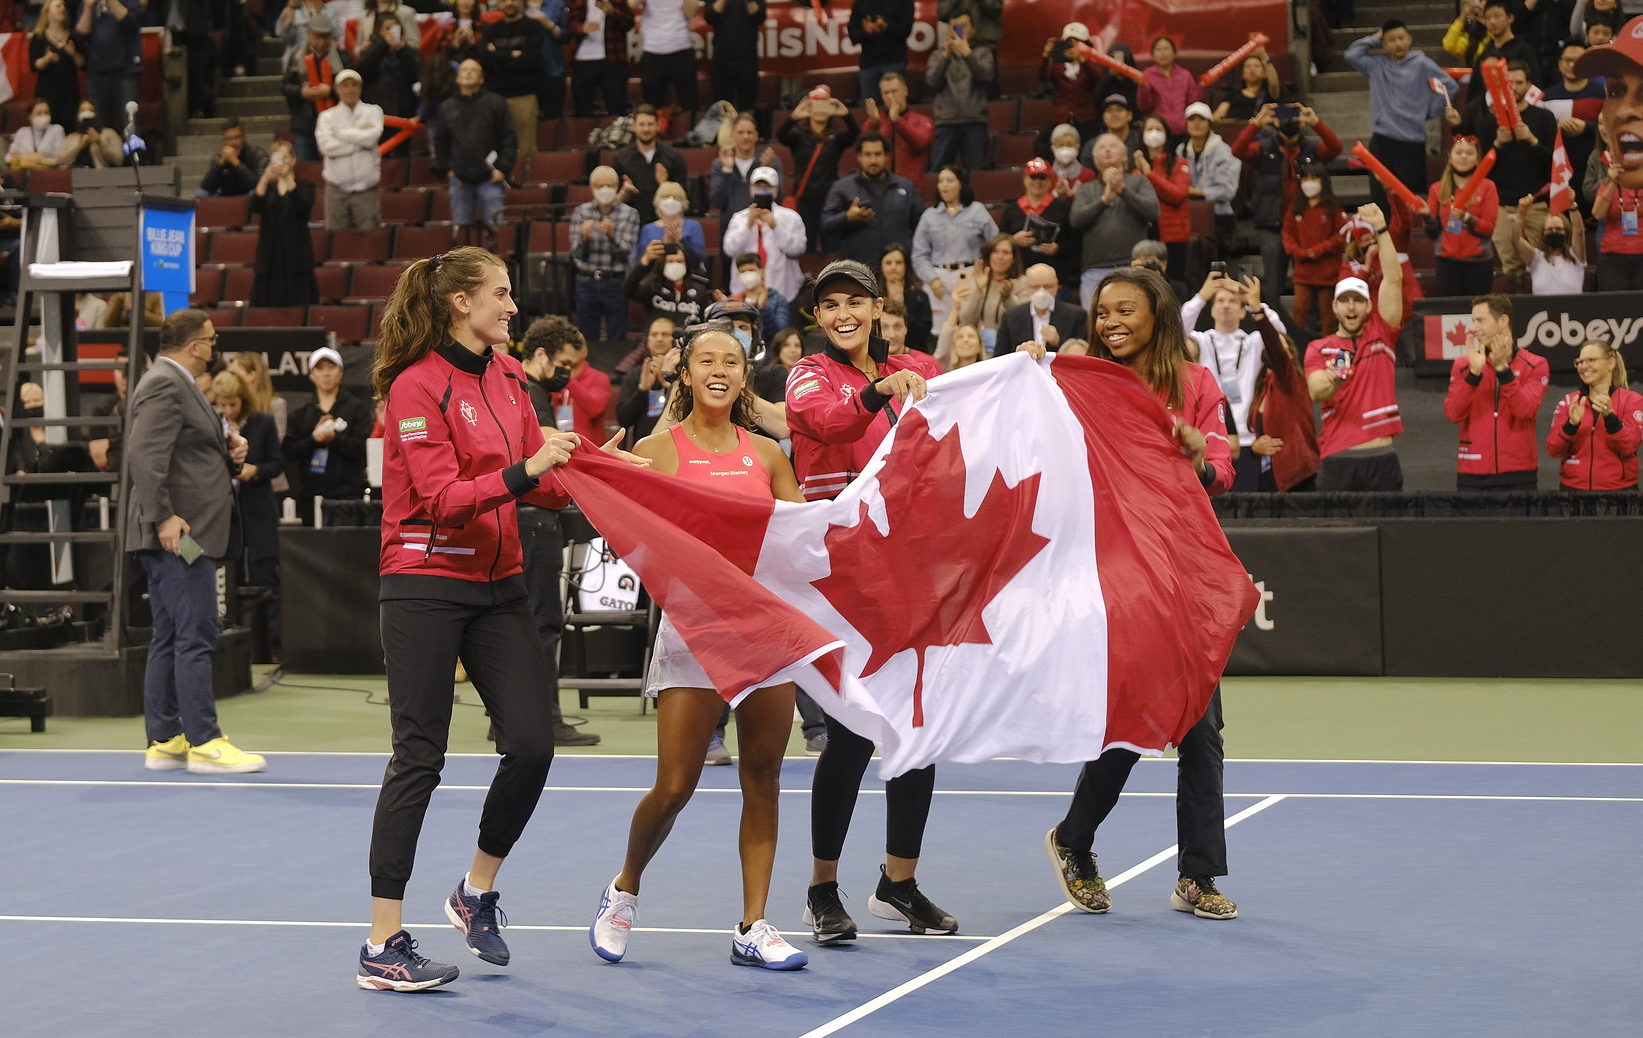 Rebecca Marino, Leylah Fernandez Heidi El-Tabak and Francoise Abanda hold the Canadian flag on court.